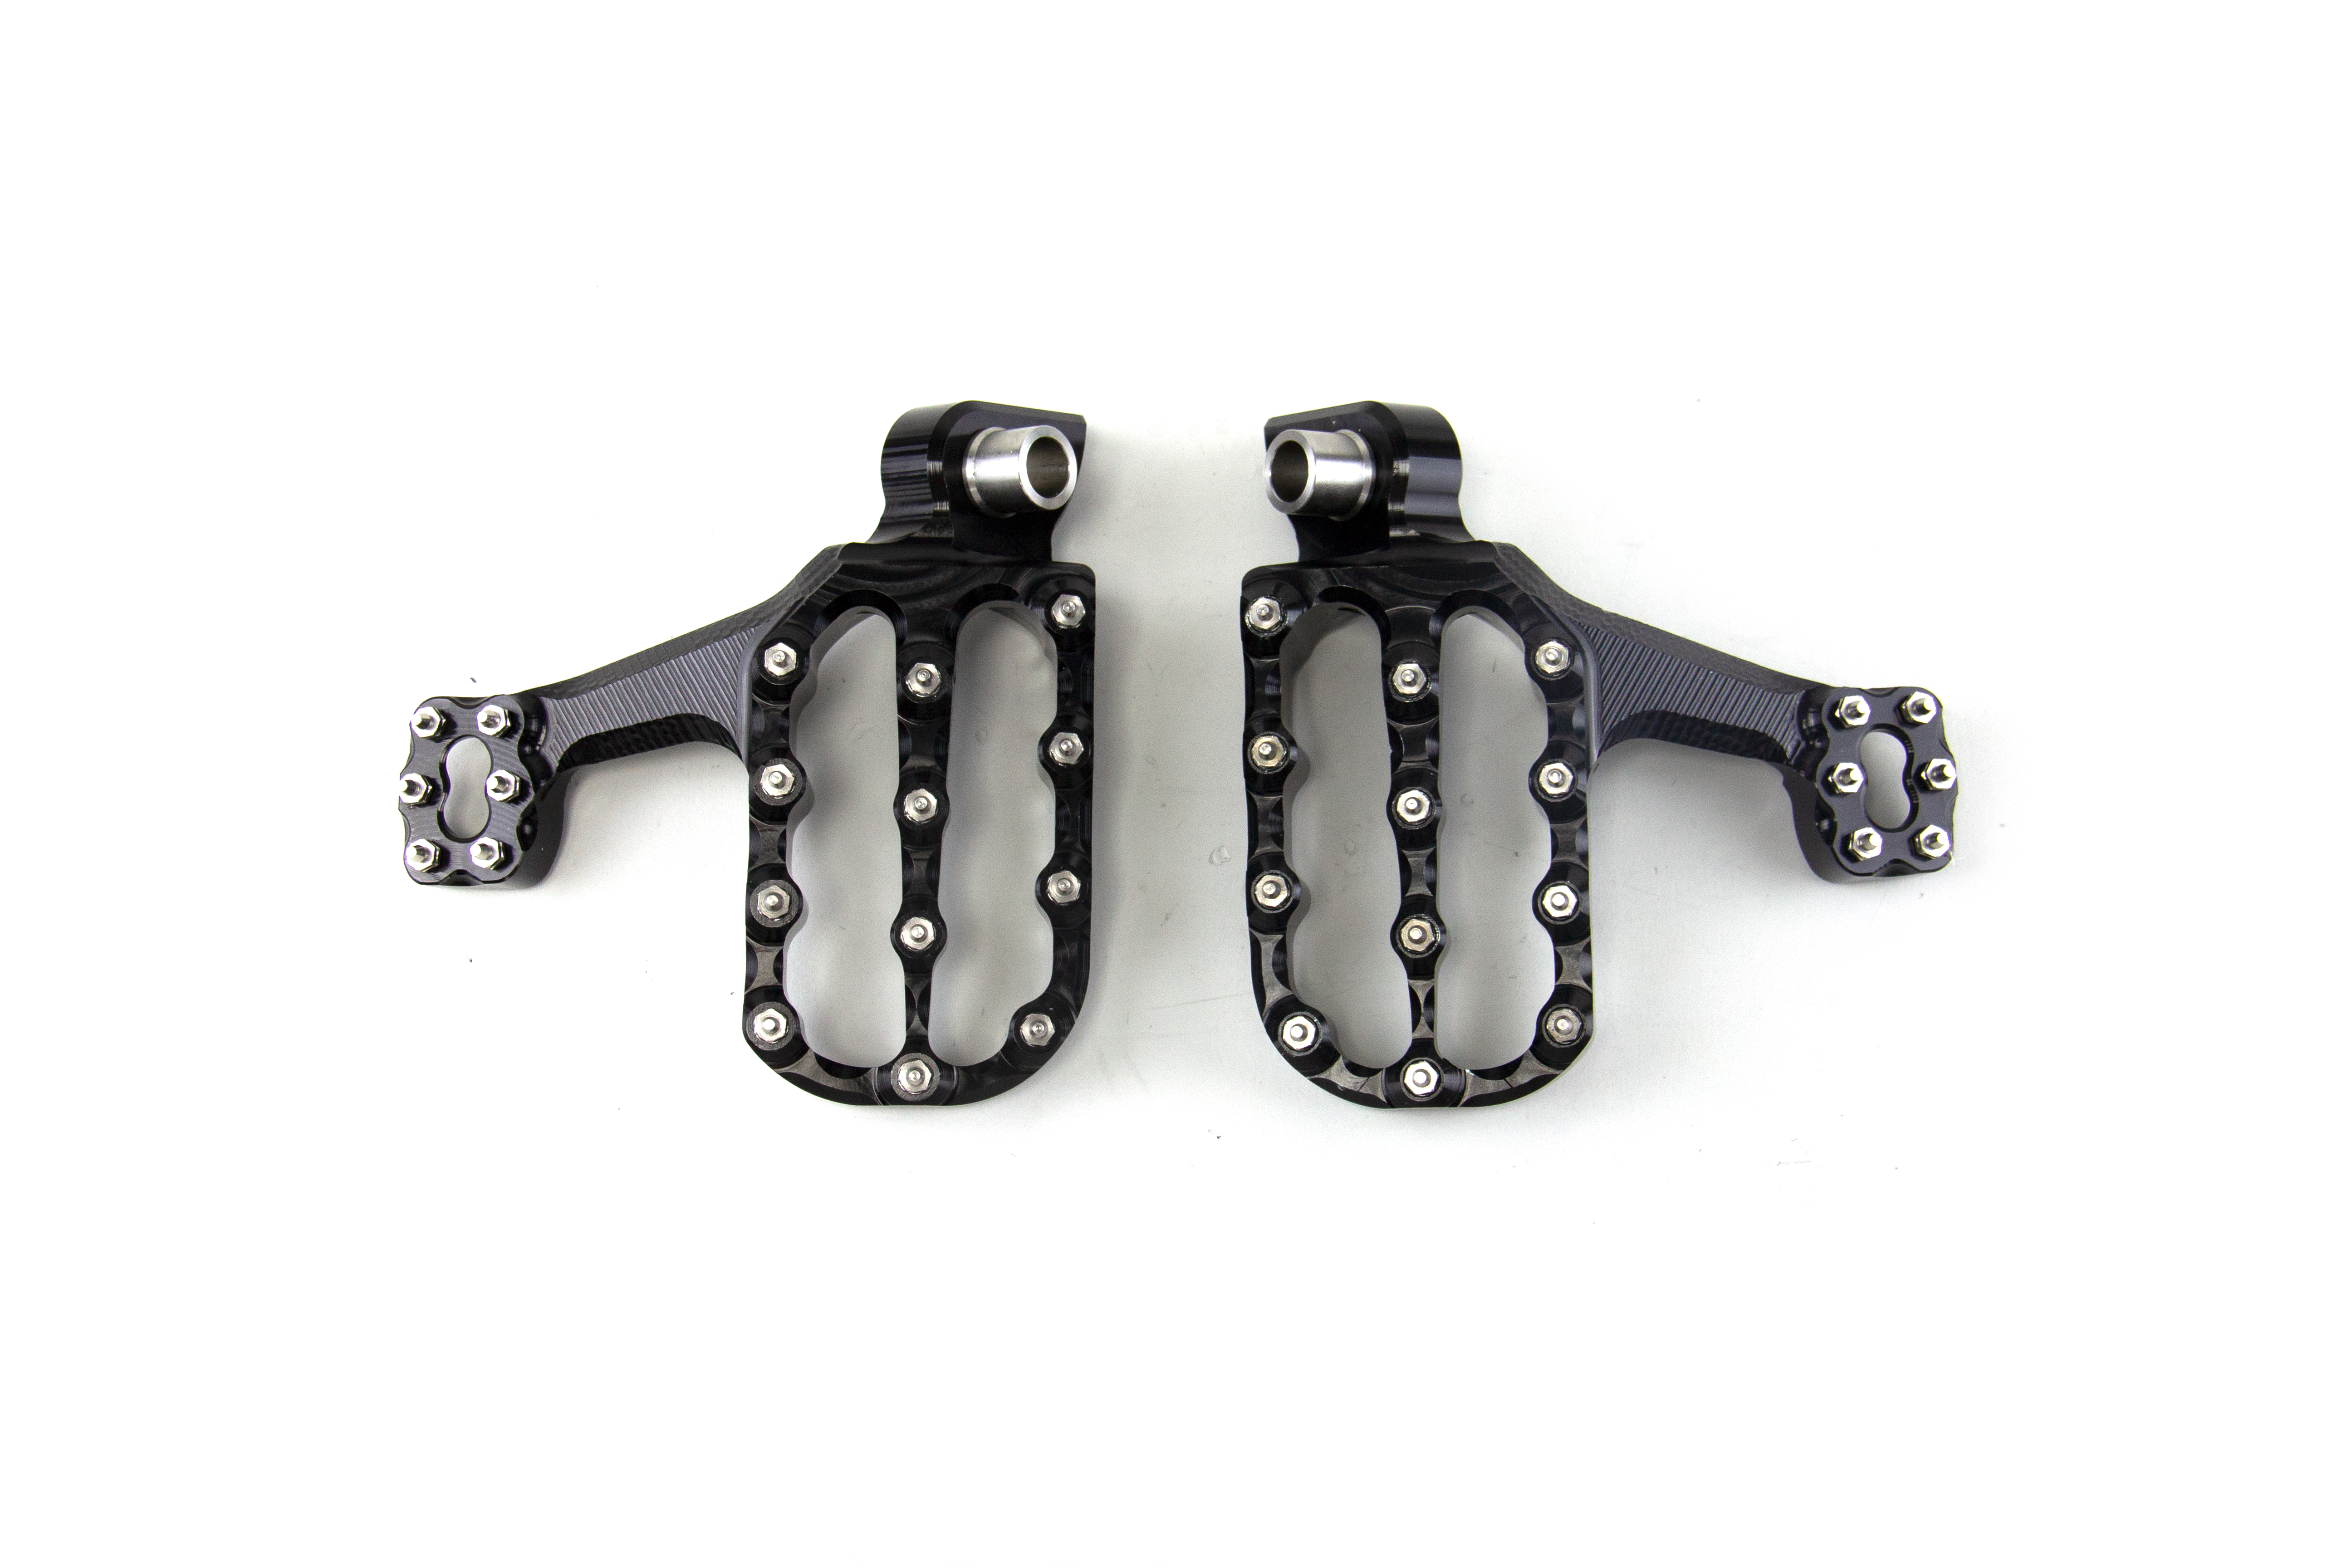 Universal Aluminum Cnc Off-road Motorcycle Footpeg Foot Pegs Footrest Motorbike Accessories